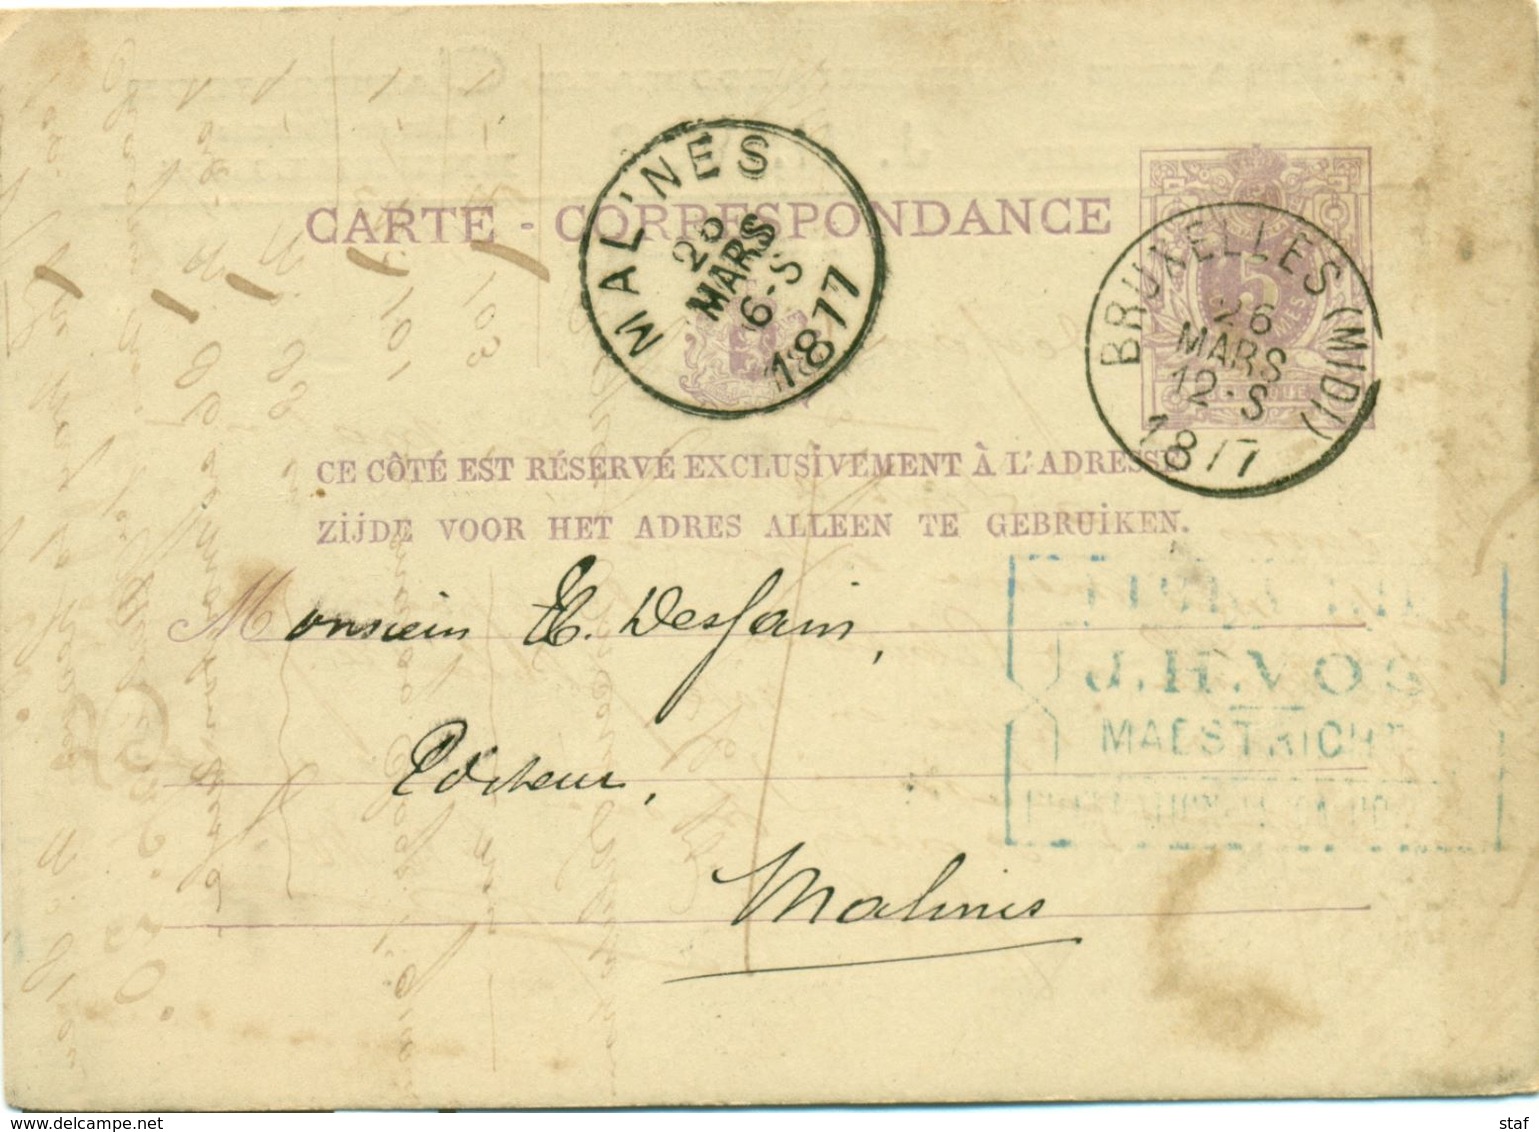 Briefkaart - Carte Correspondance Nr 9 - Afz. Librairie Internationale Catholique J. H. Vos Te Maestricht : 1877 - Stamperia & Cartoleria